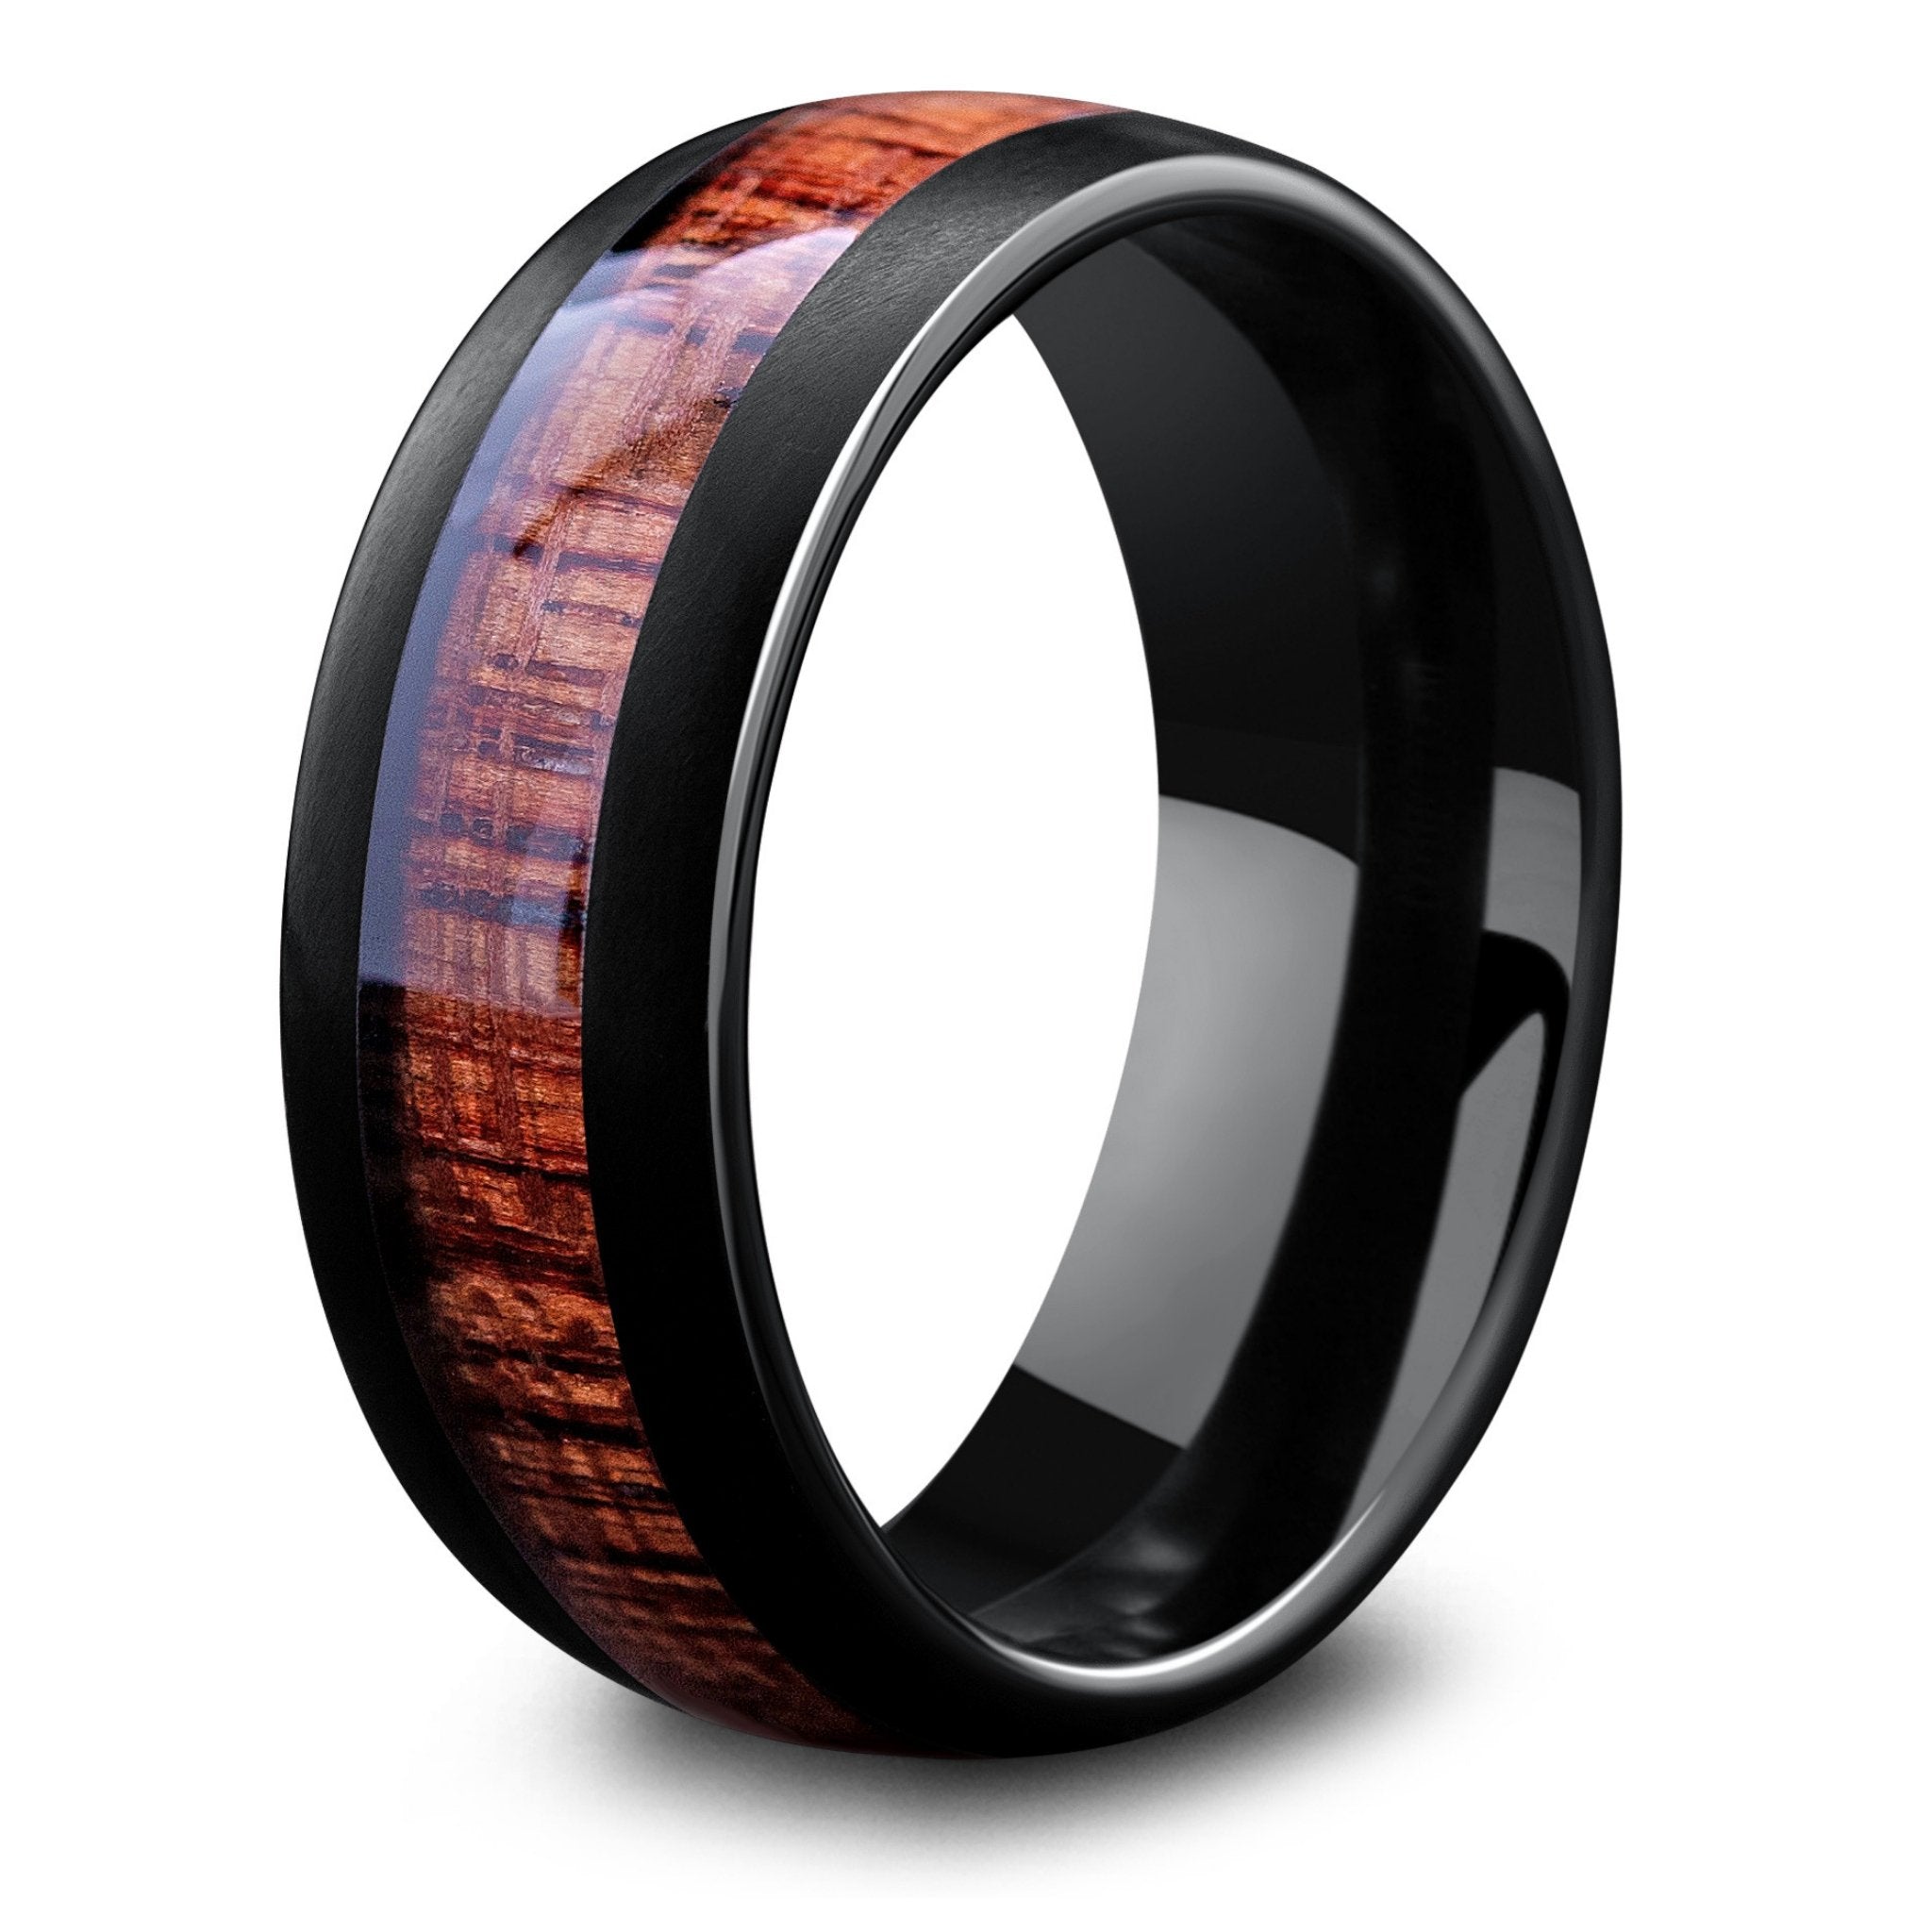 8mm Black Tungsten Wedding Band with Koa Wood Inlay – Northern Royal, LLC